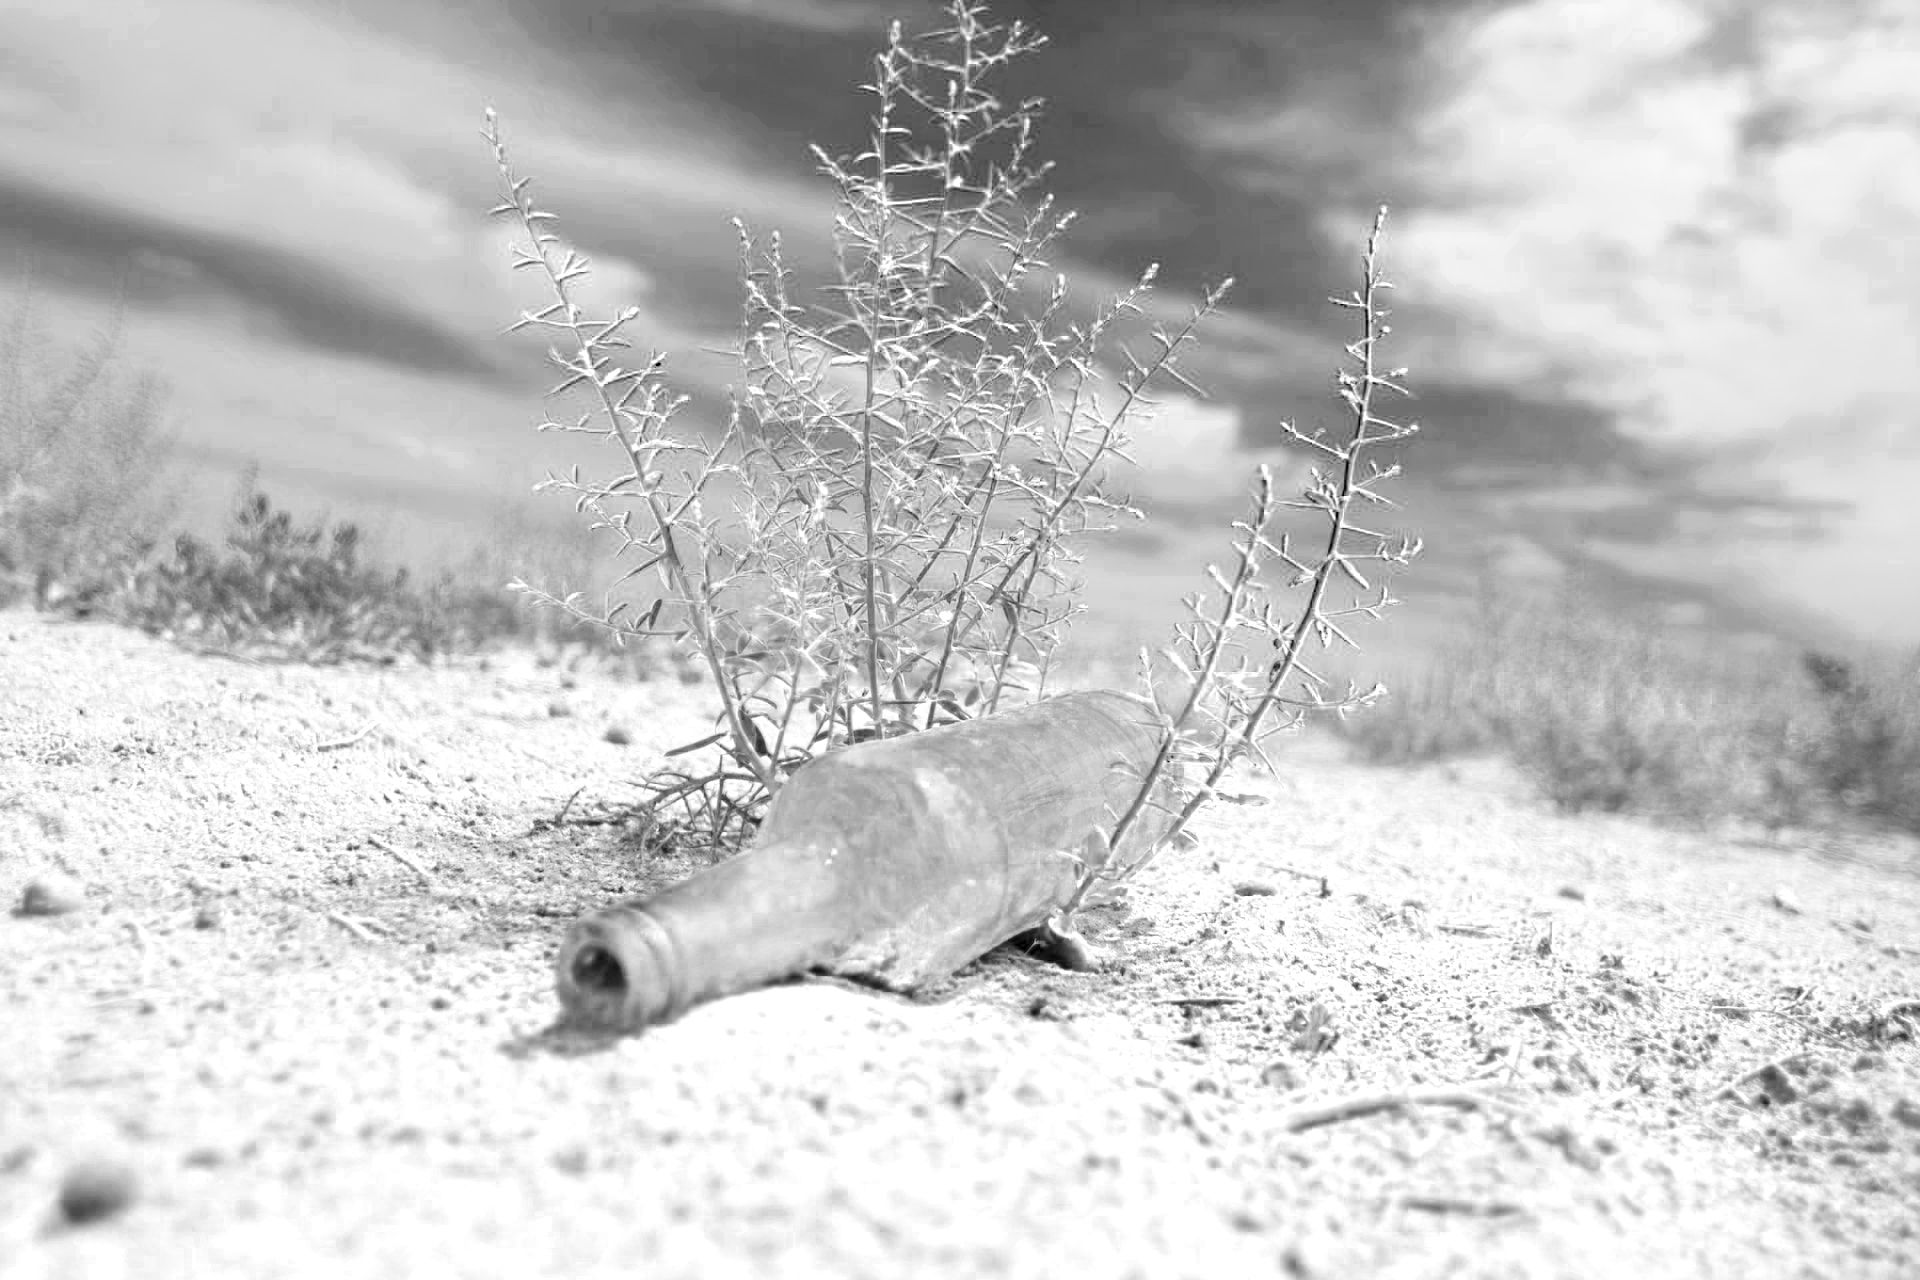 A bottle in the Kyzylkum Desert